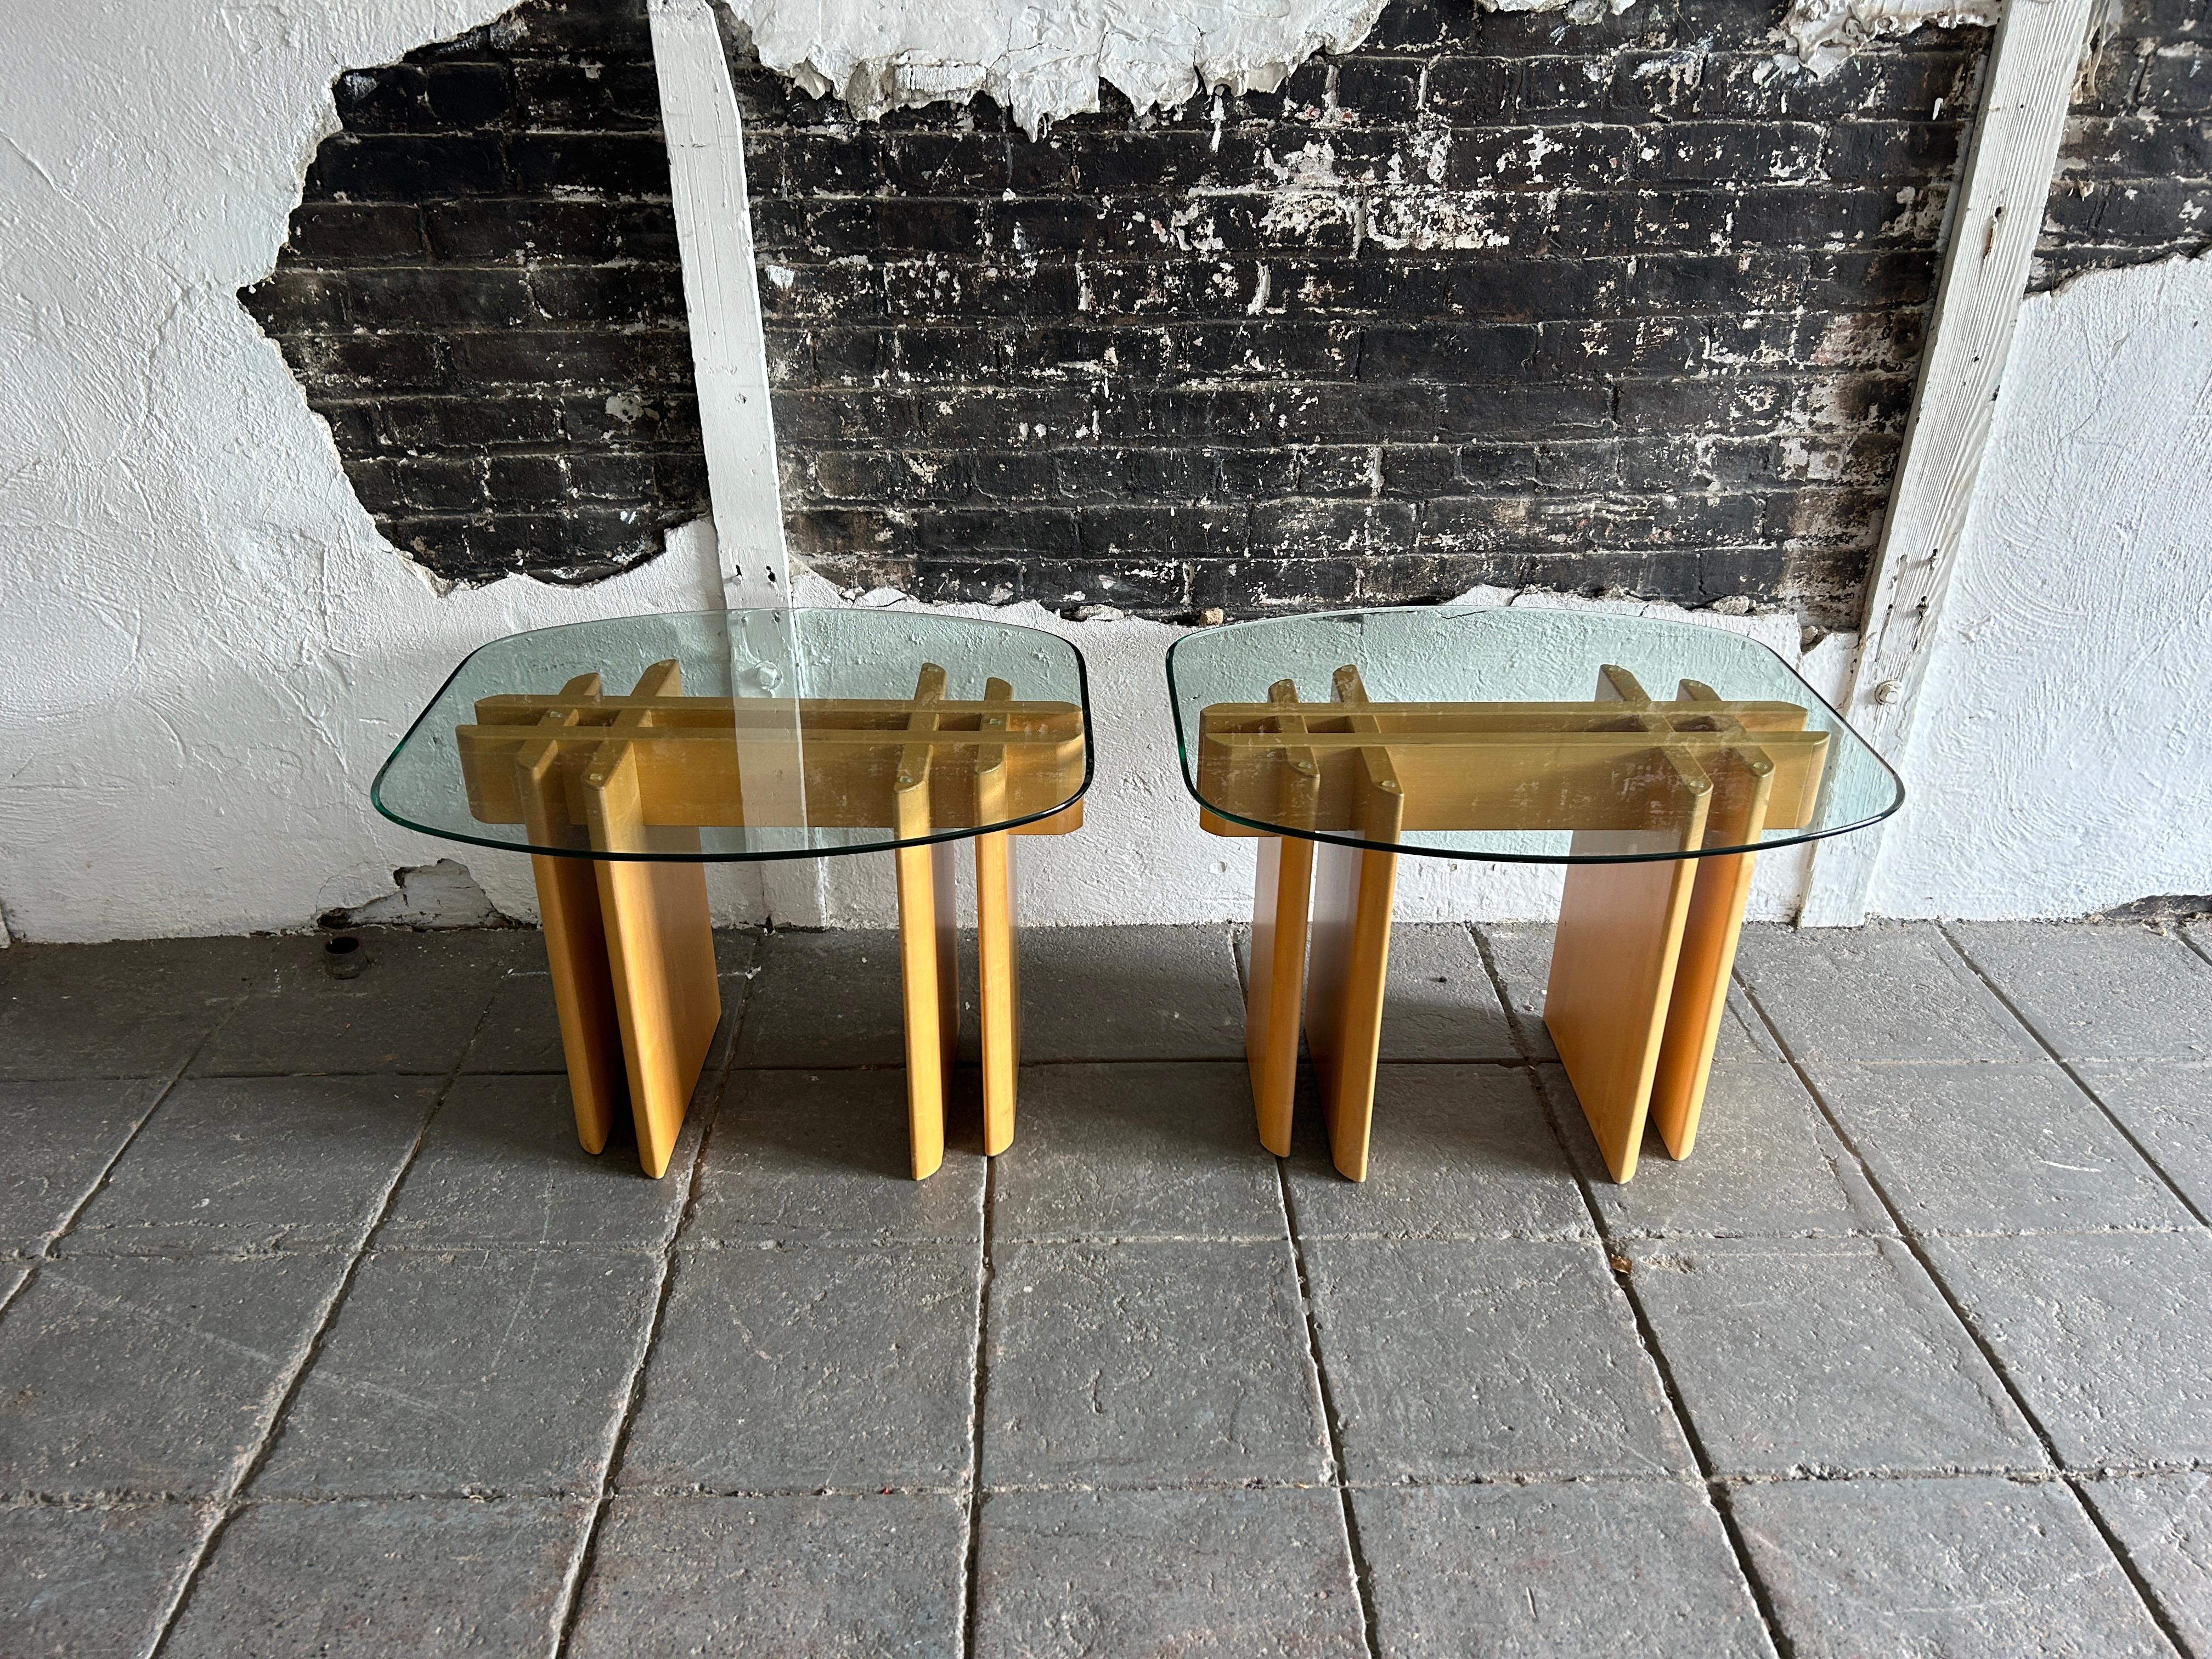 Paar Tisch Gustav Gaarde Birke und Glas Endtische.

Verkauft als Paar 